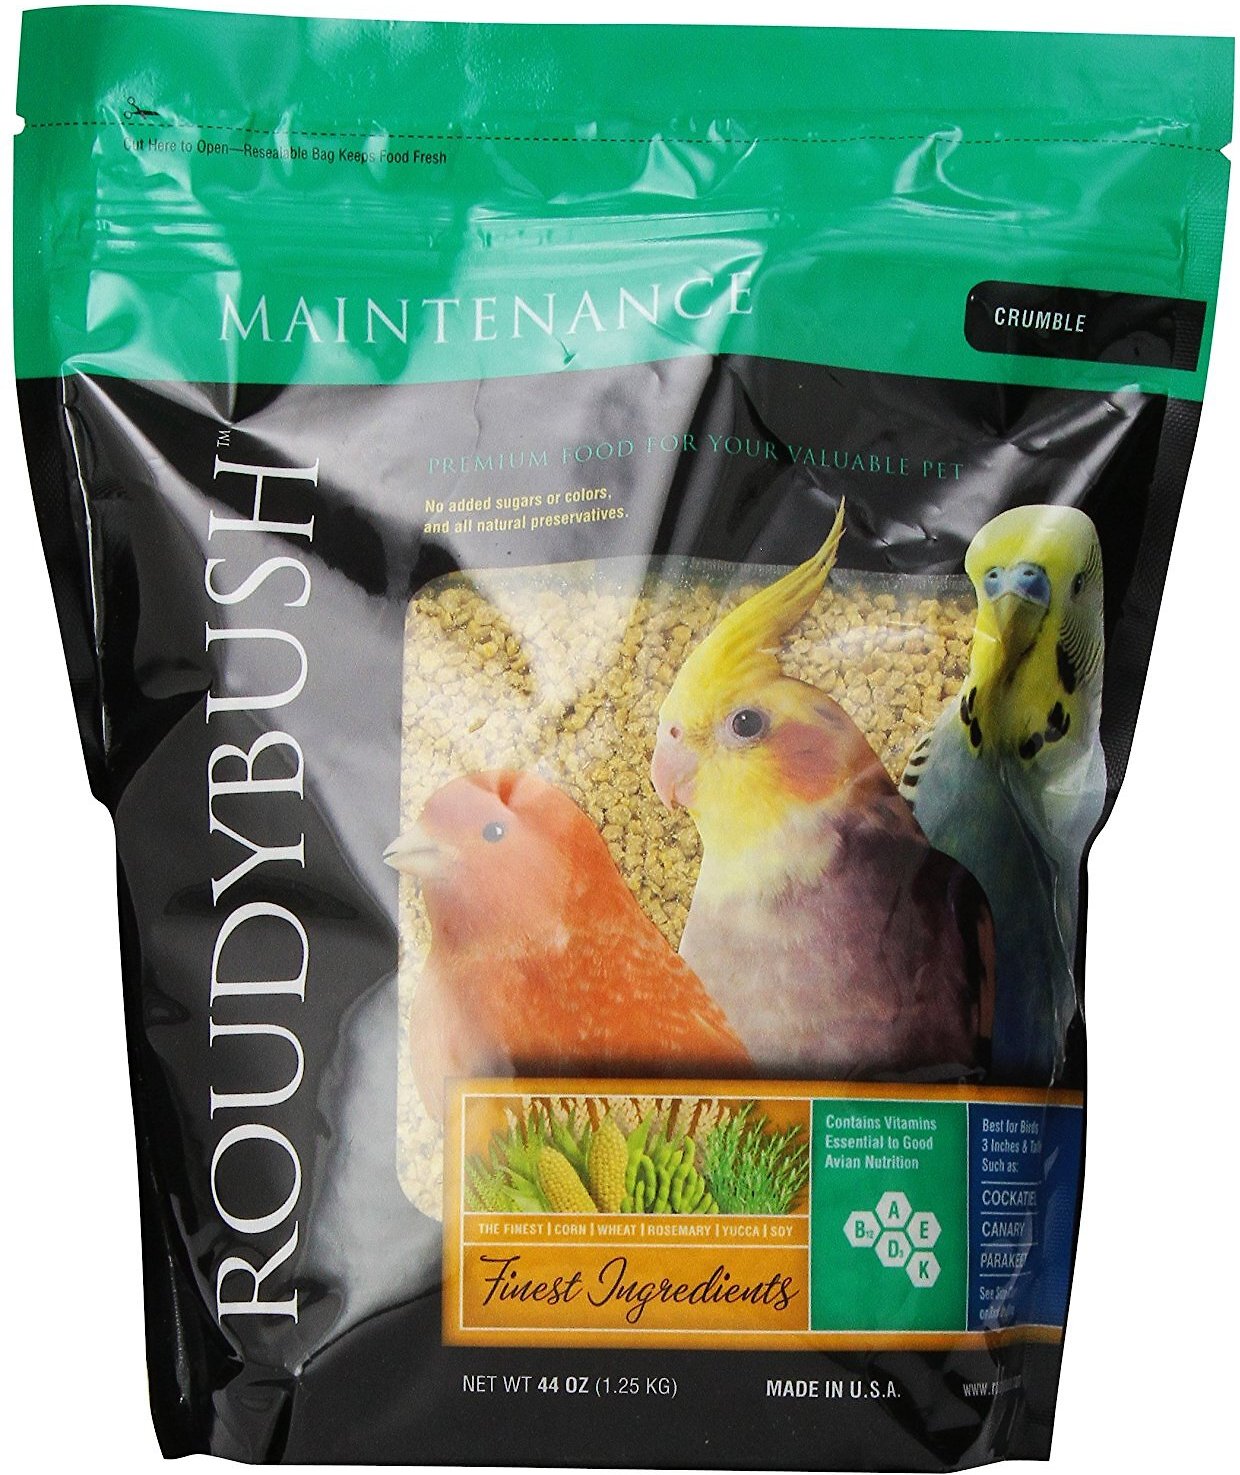 1-Pound Roudybush Squab Diet for Birds